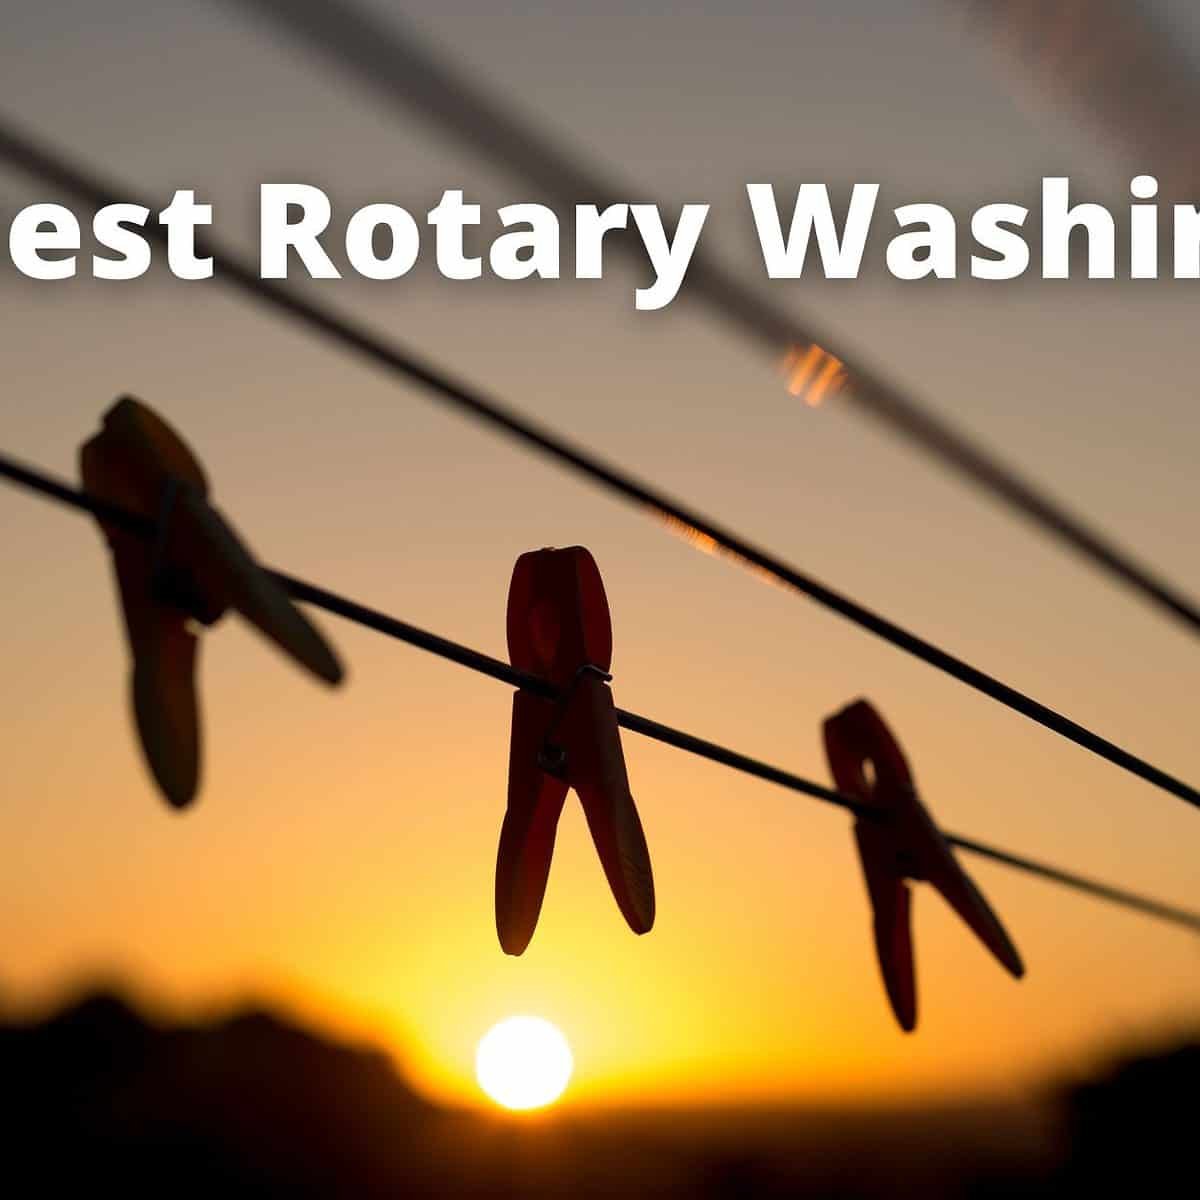 Best Rotary Washing Line